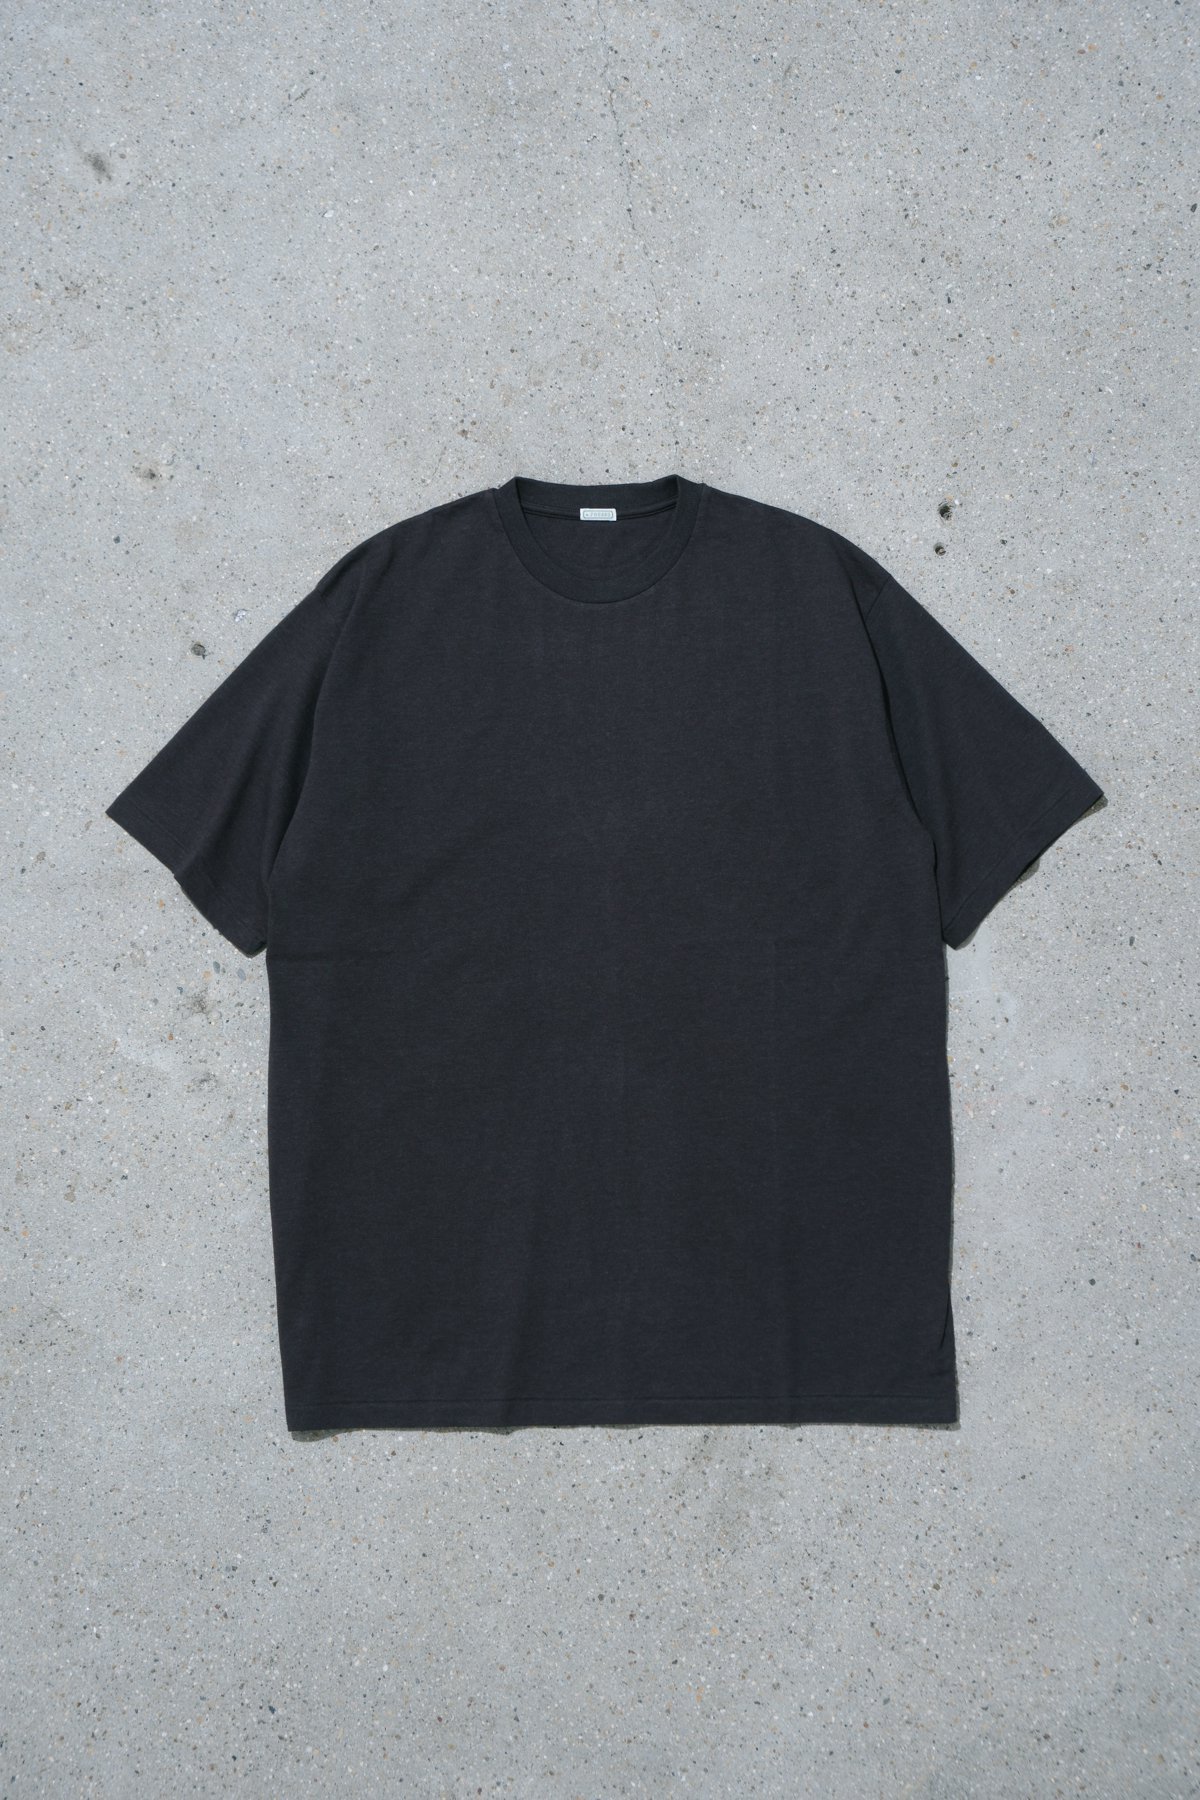 A.PRESSE / Cashmere Blend S/S T-Shirt